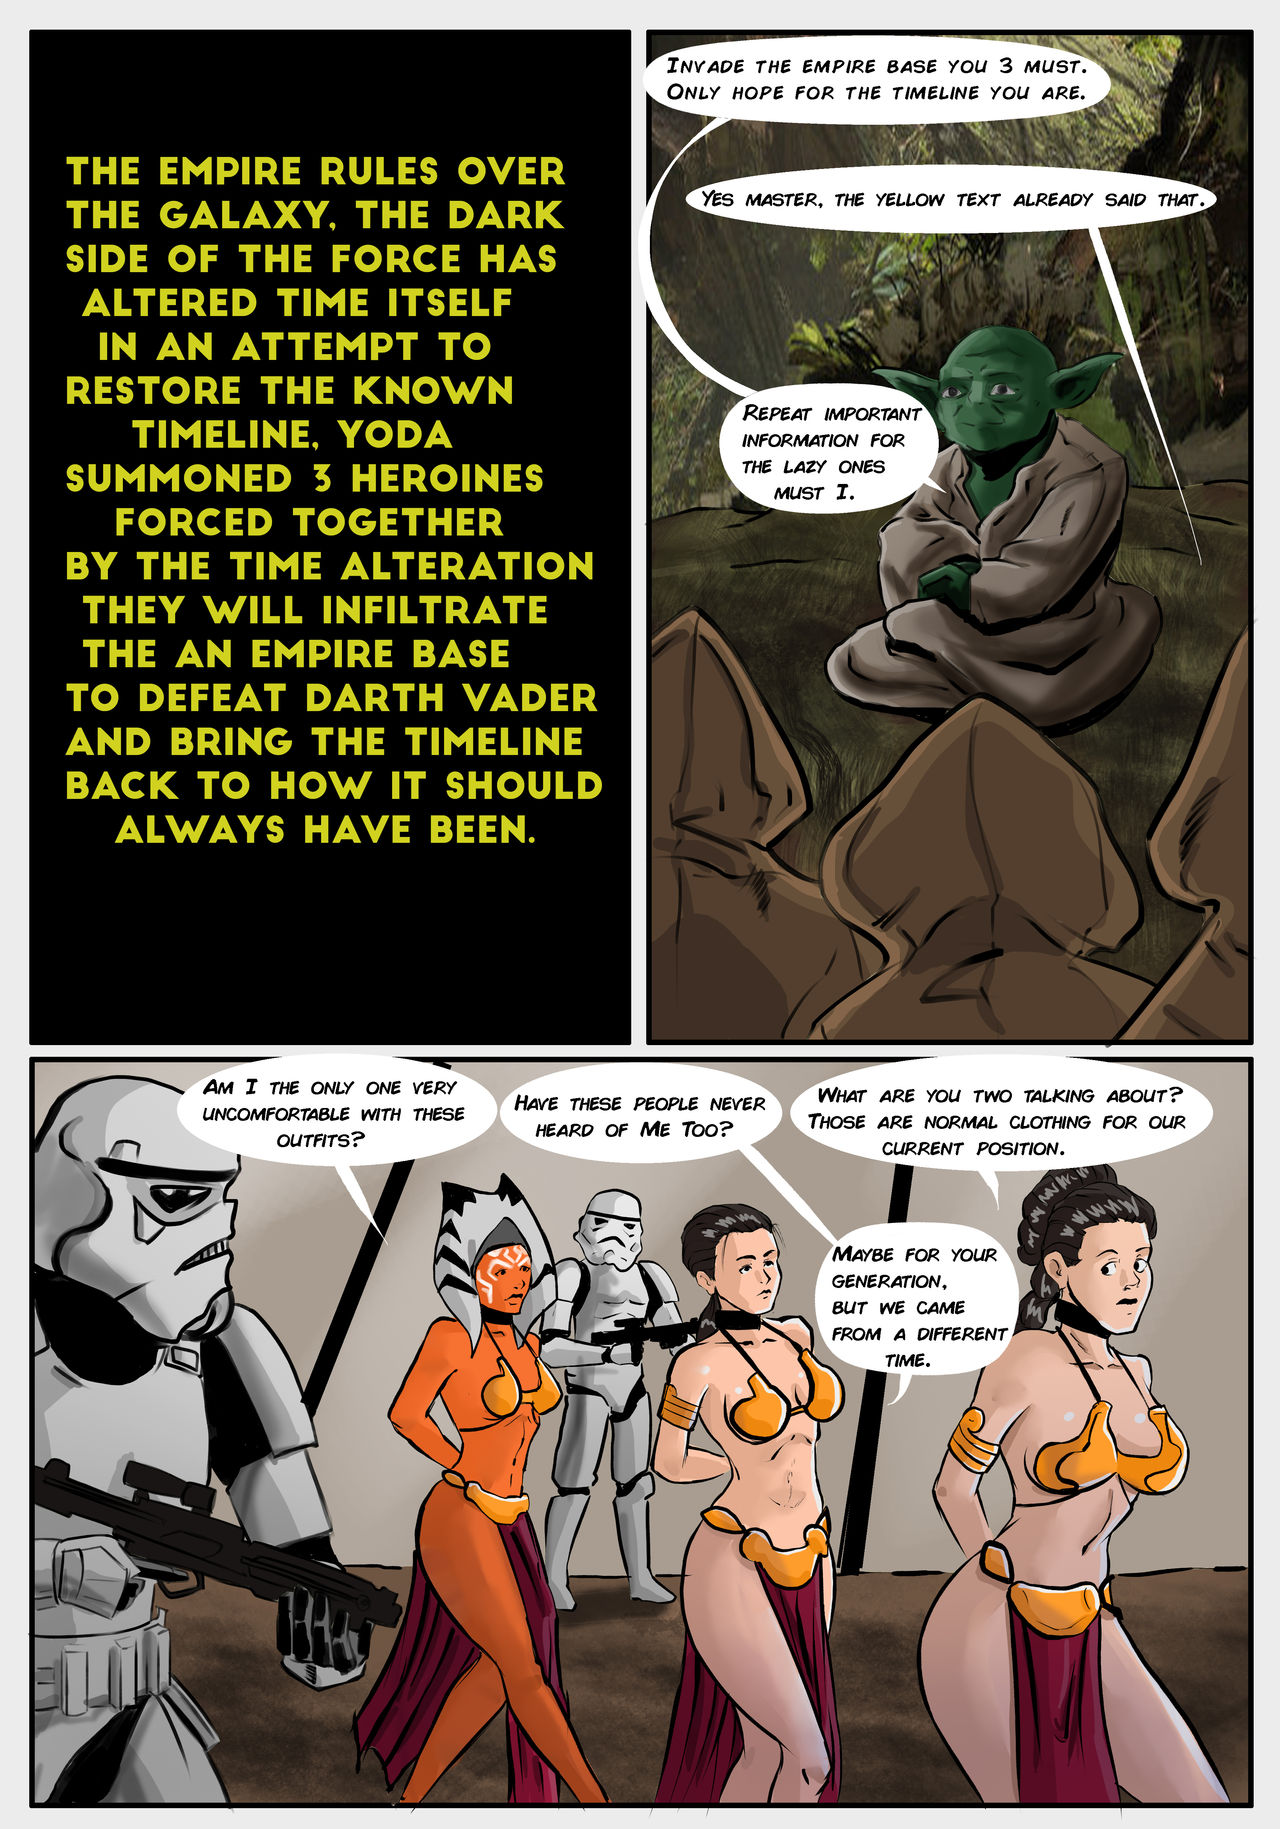 Star wars nude comic